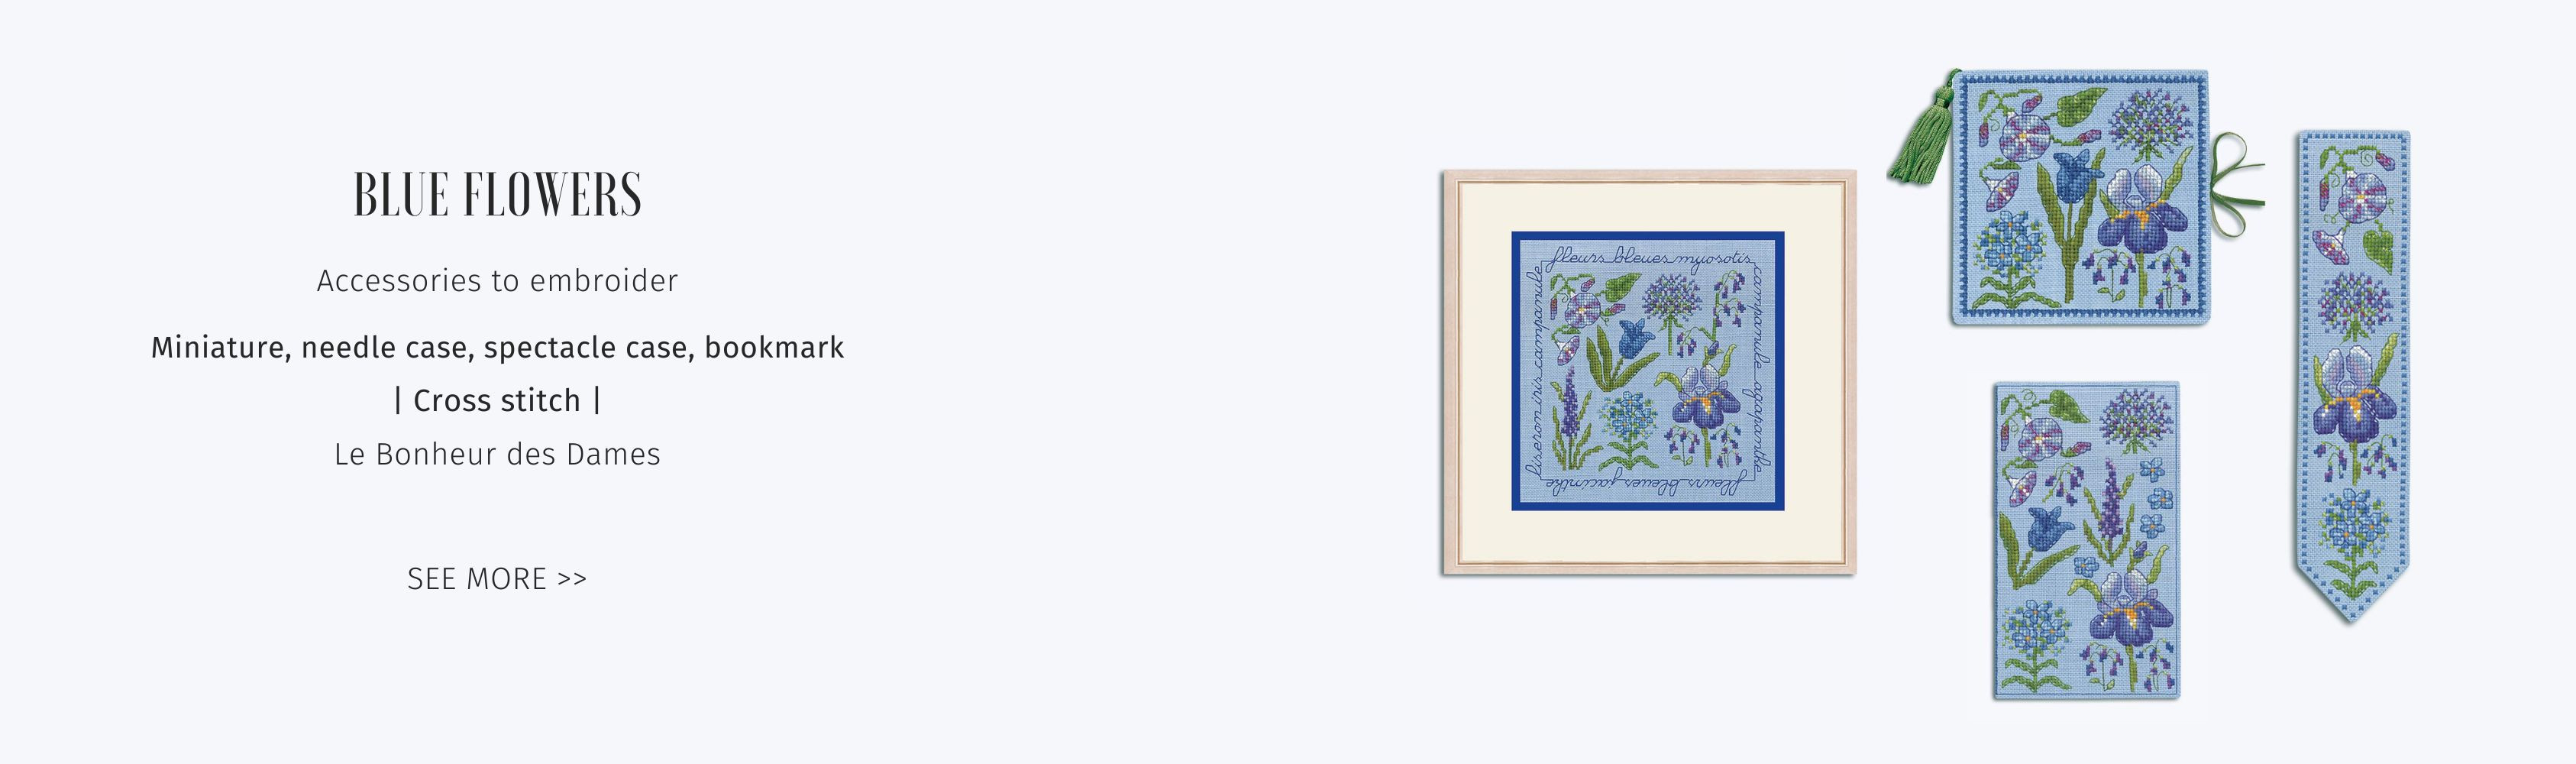 Collection Blue Flowers. Accessories to embroider: spectacle case, needle case, bookmark, miniature picture. Le Bonheur des Dames